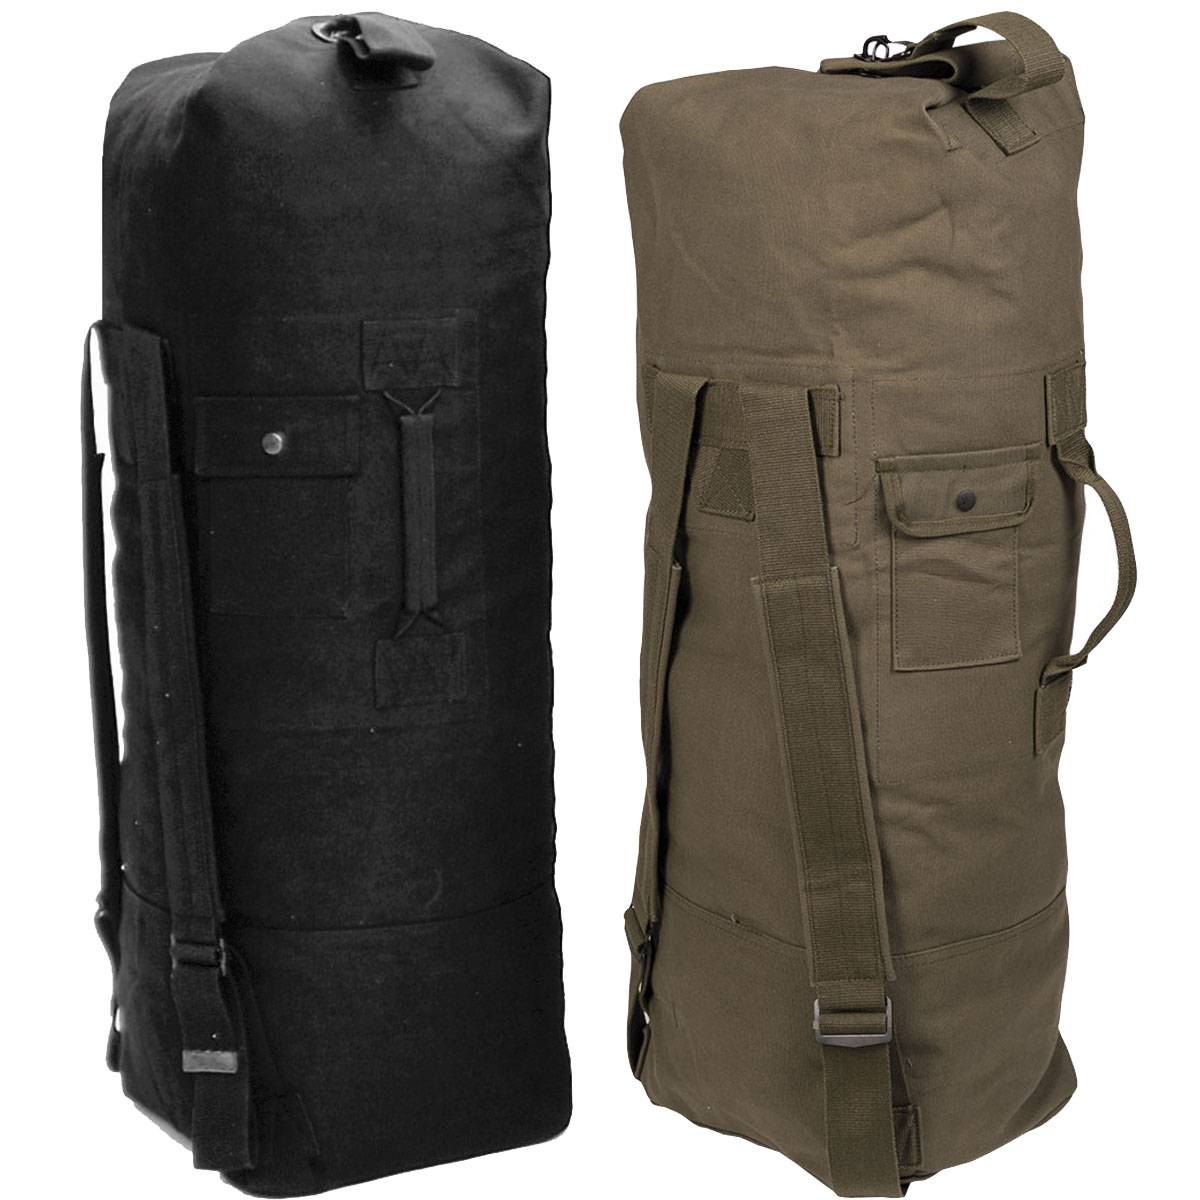 NEU US Tactical Seesack mit DOPPELGURT Einsatztasche Baumwolle Tragetasche 